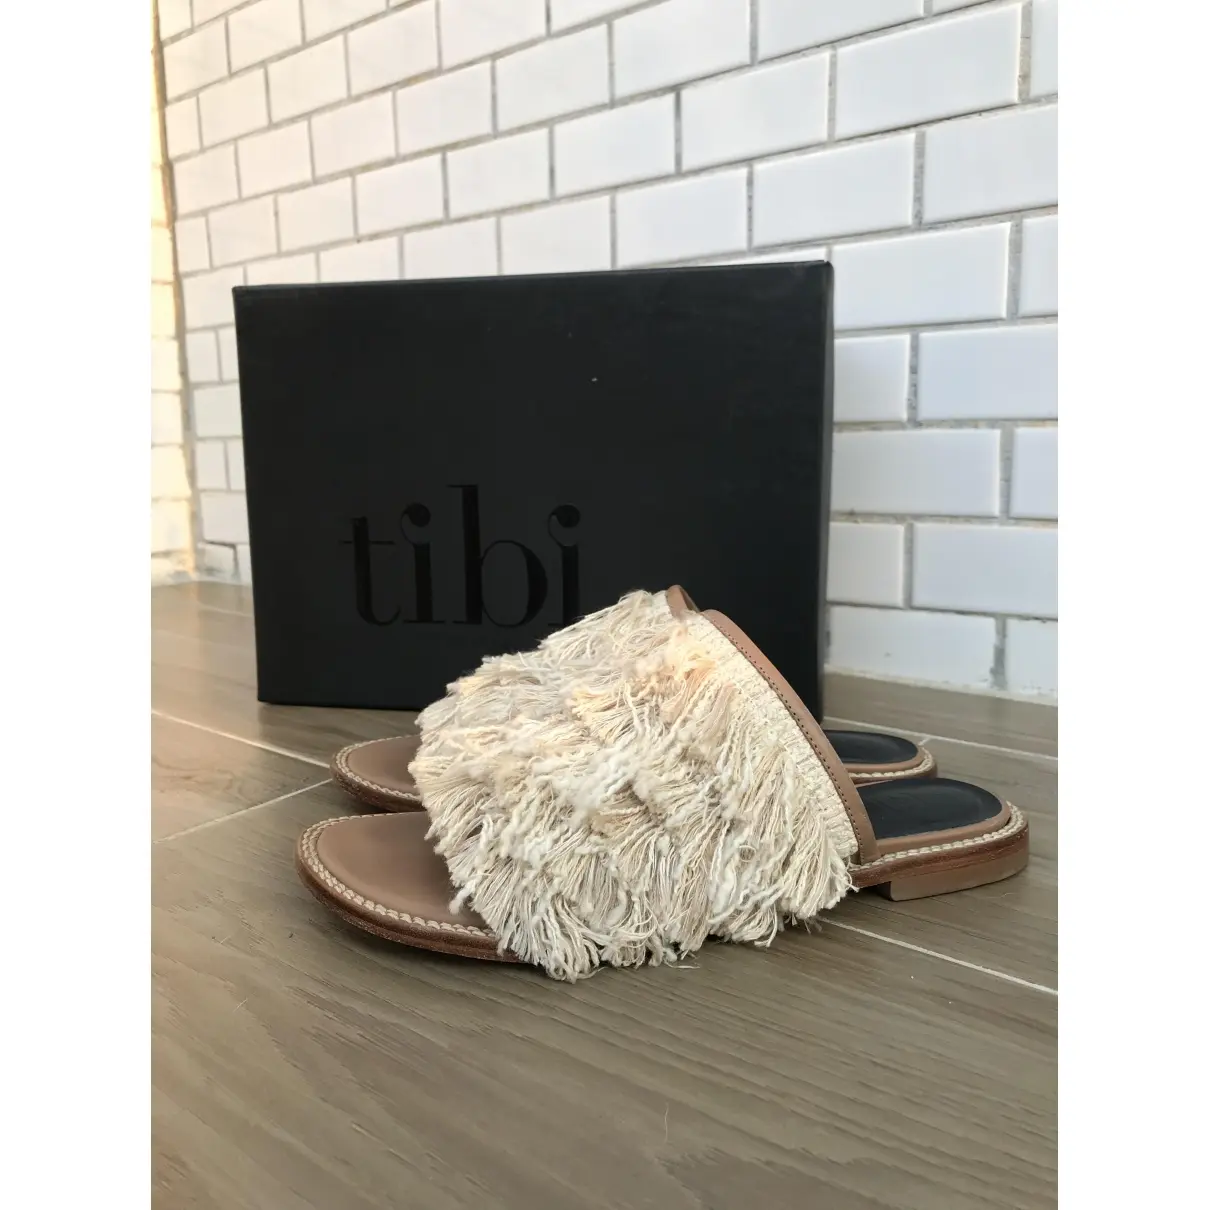 Tibi Leather sandal for sale